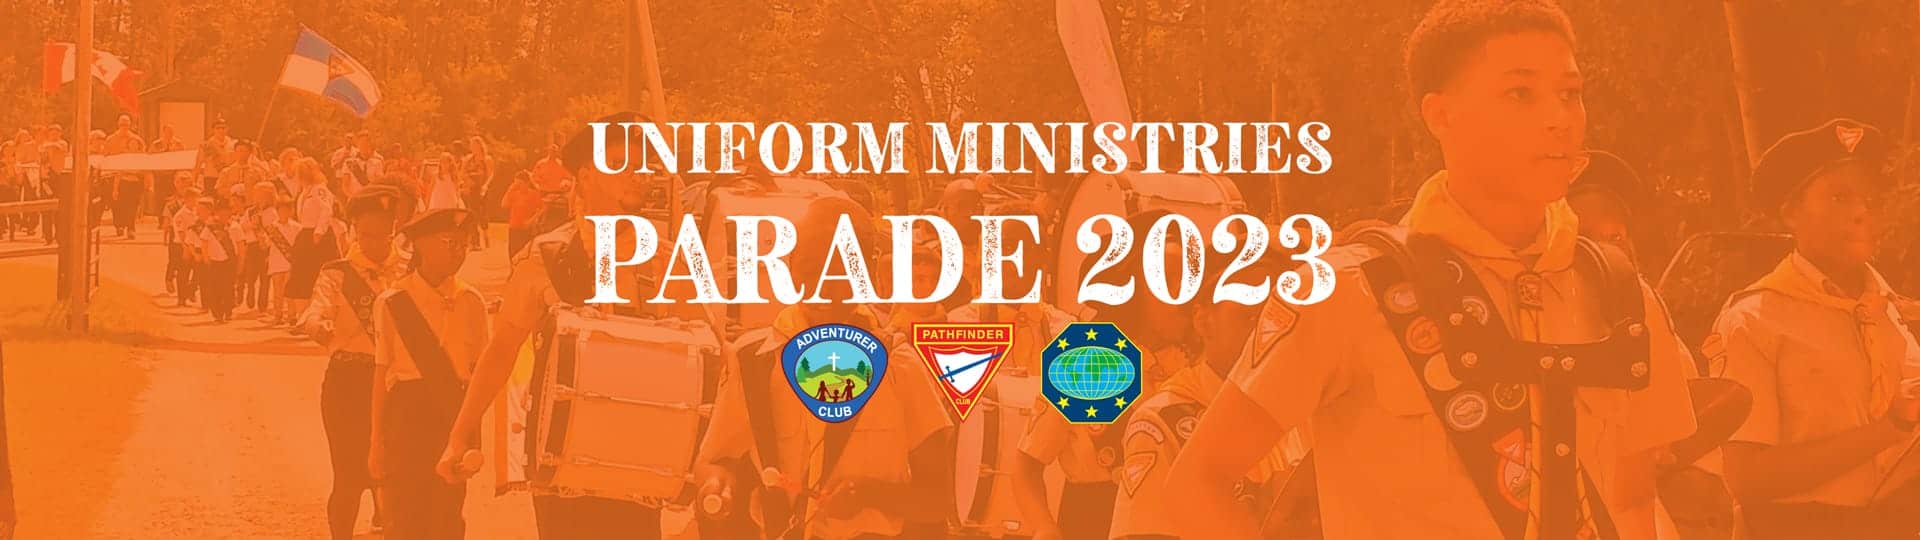 Uniform Ministries Parade 2023 Hero Image